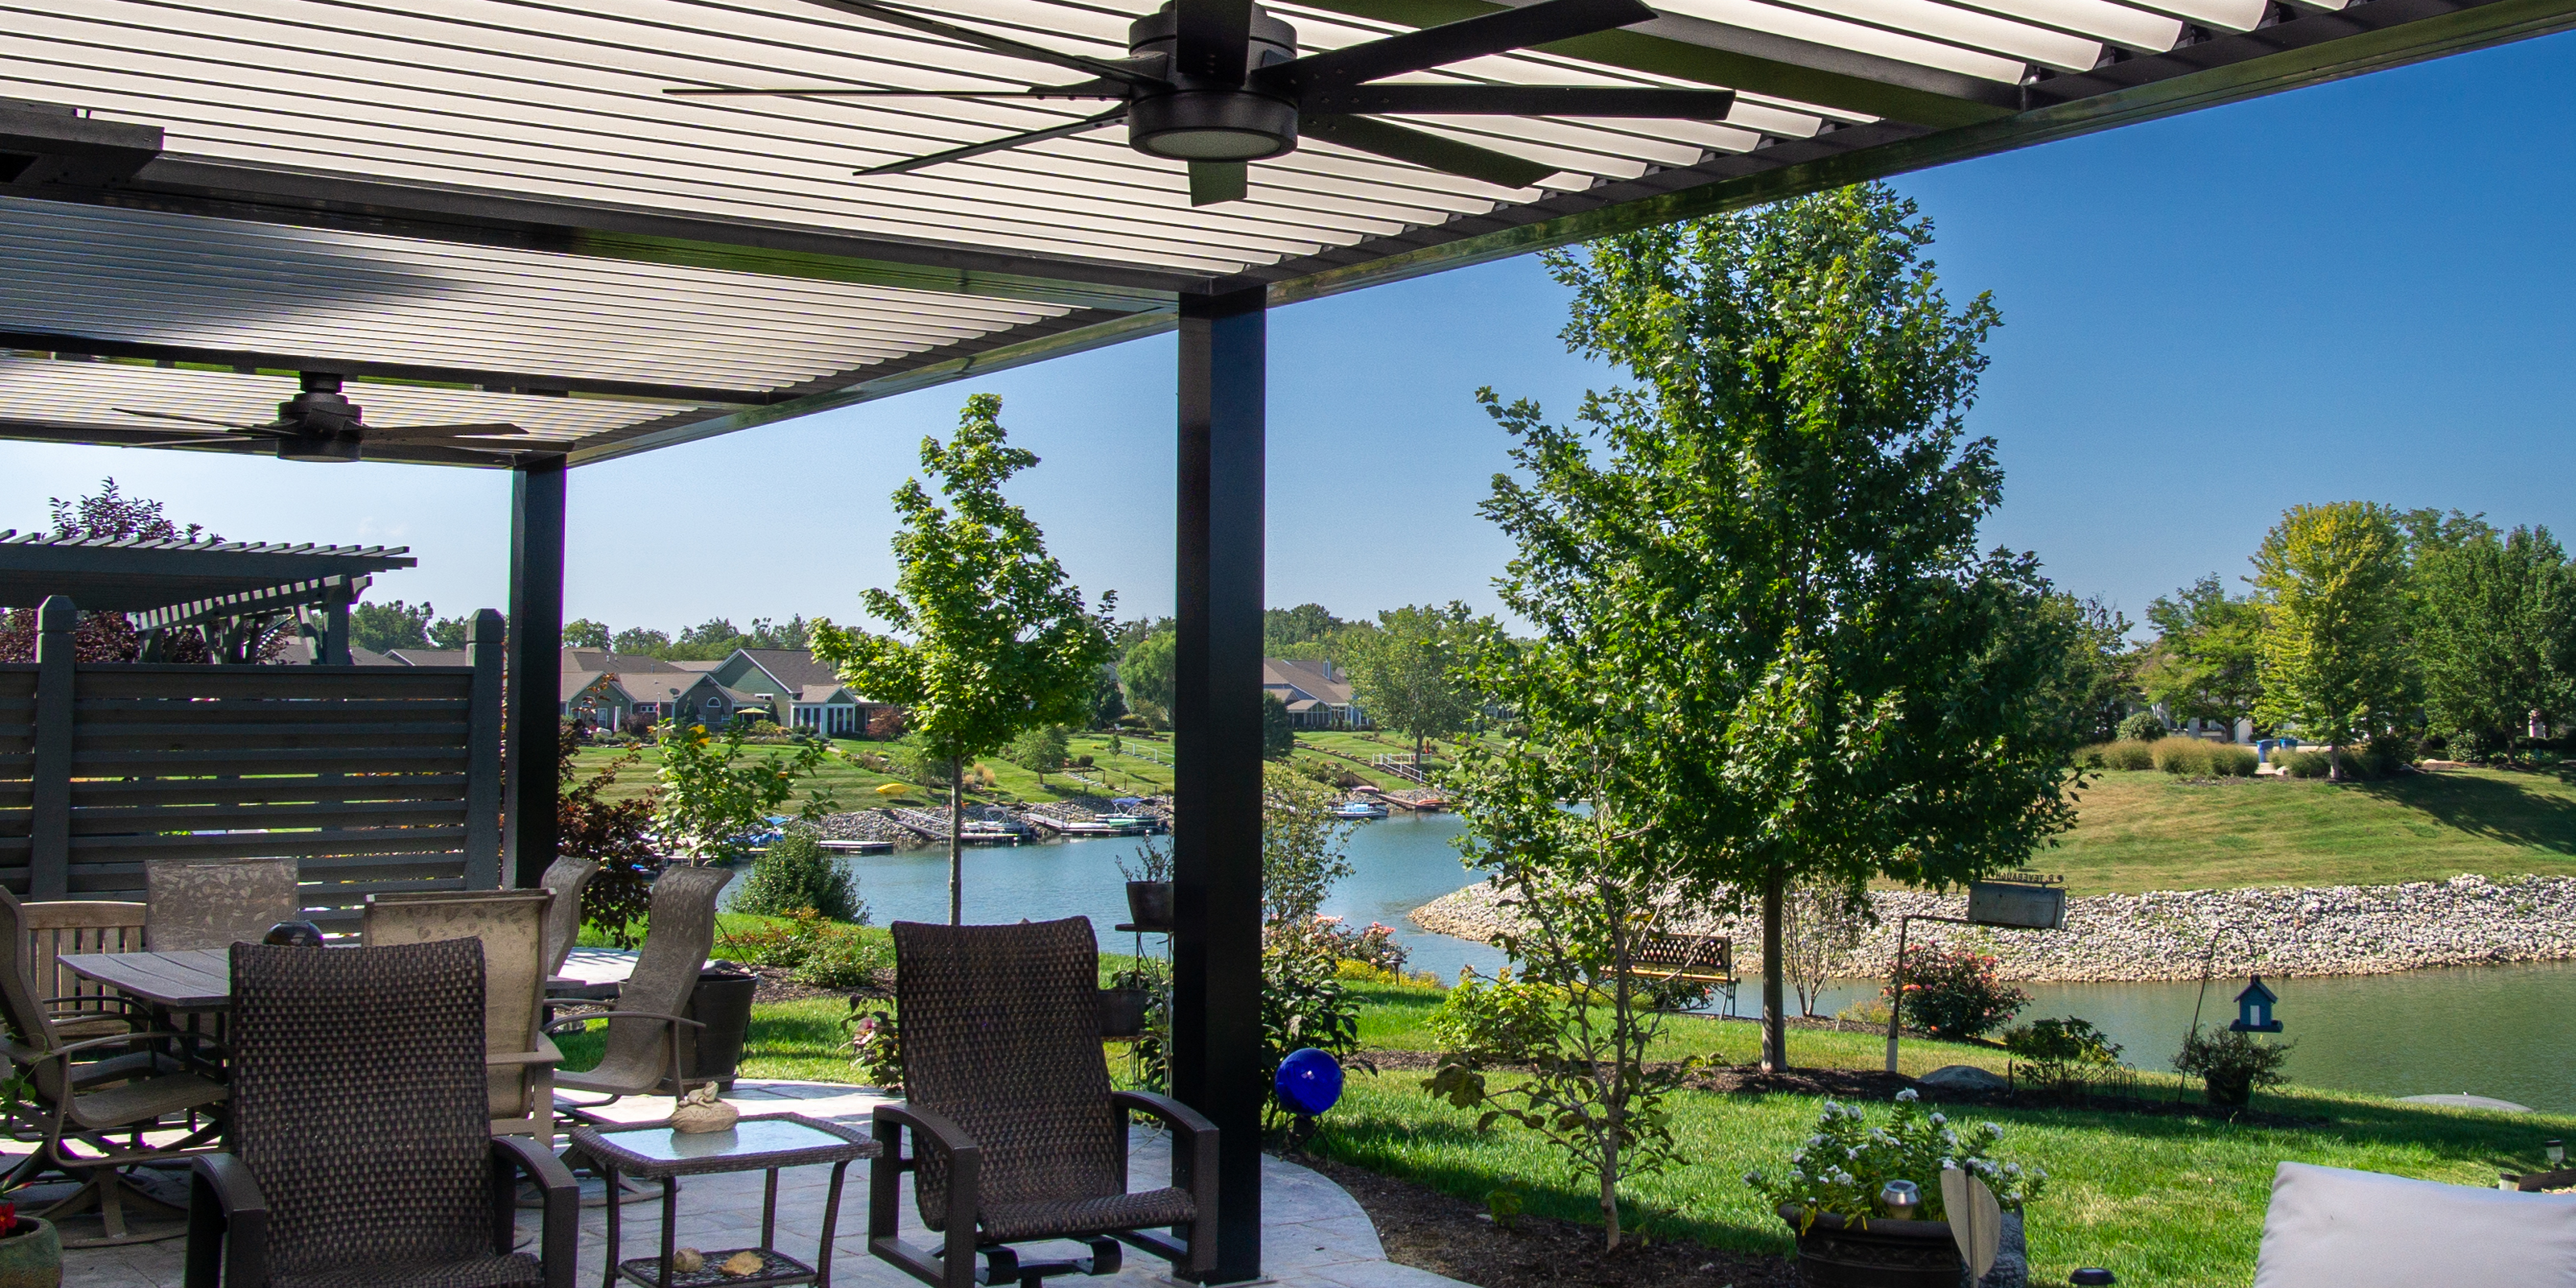 Outdoor space under florida pergola using aluminum pergolas to protect you on your existing patio